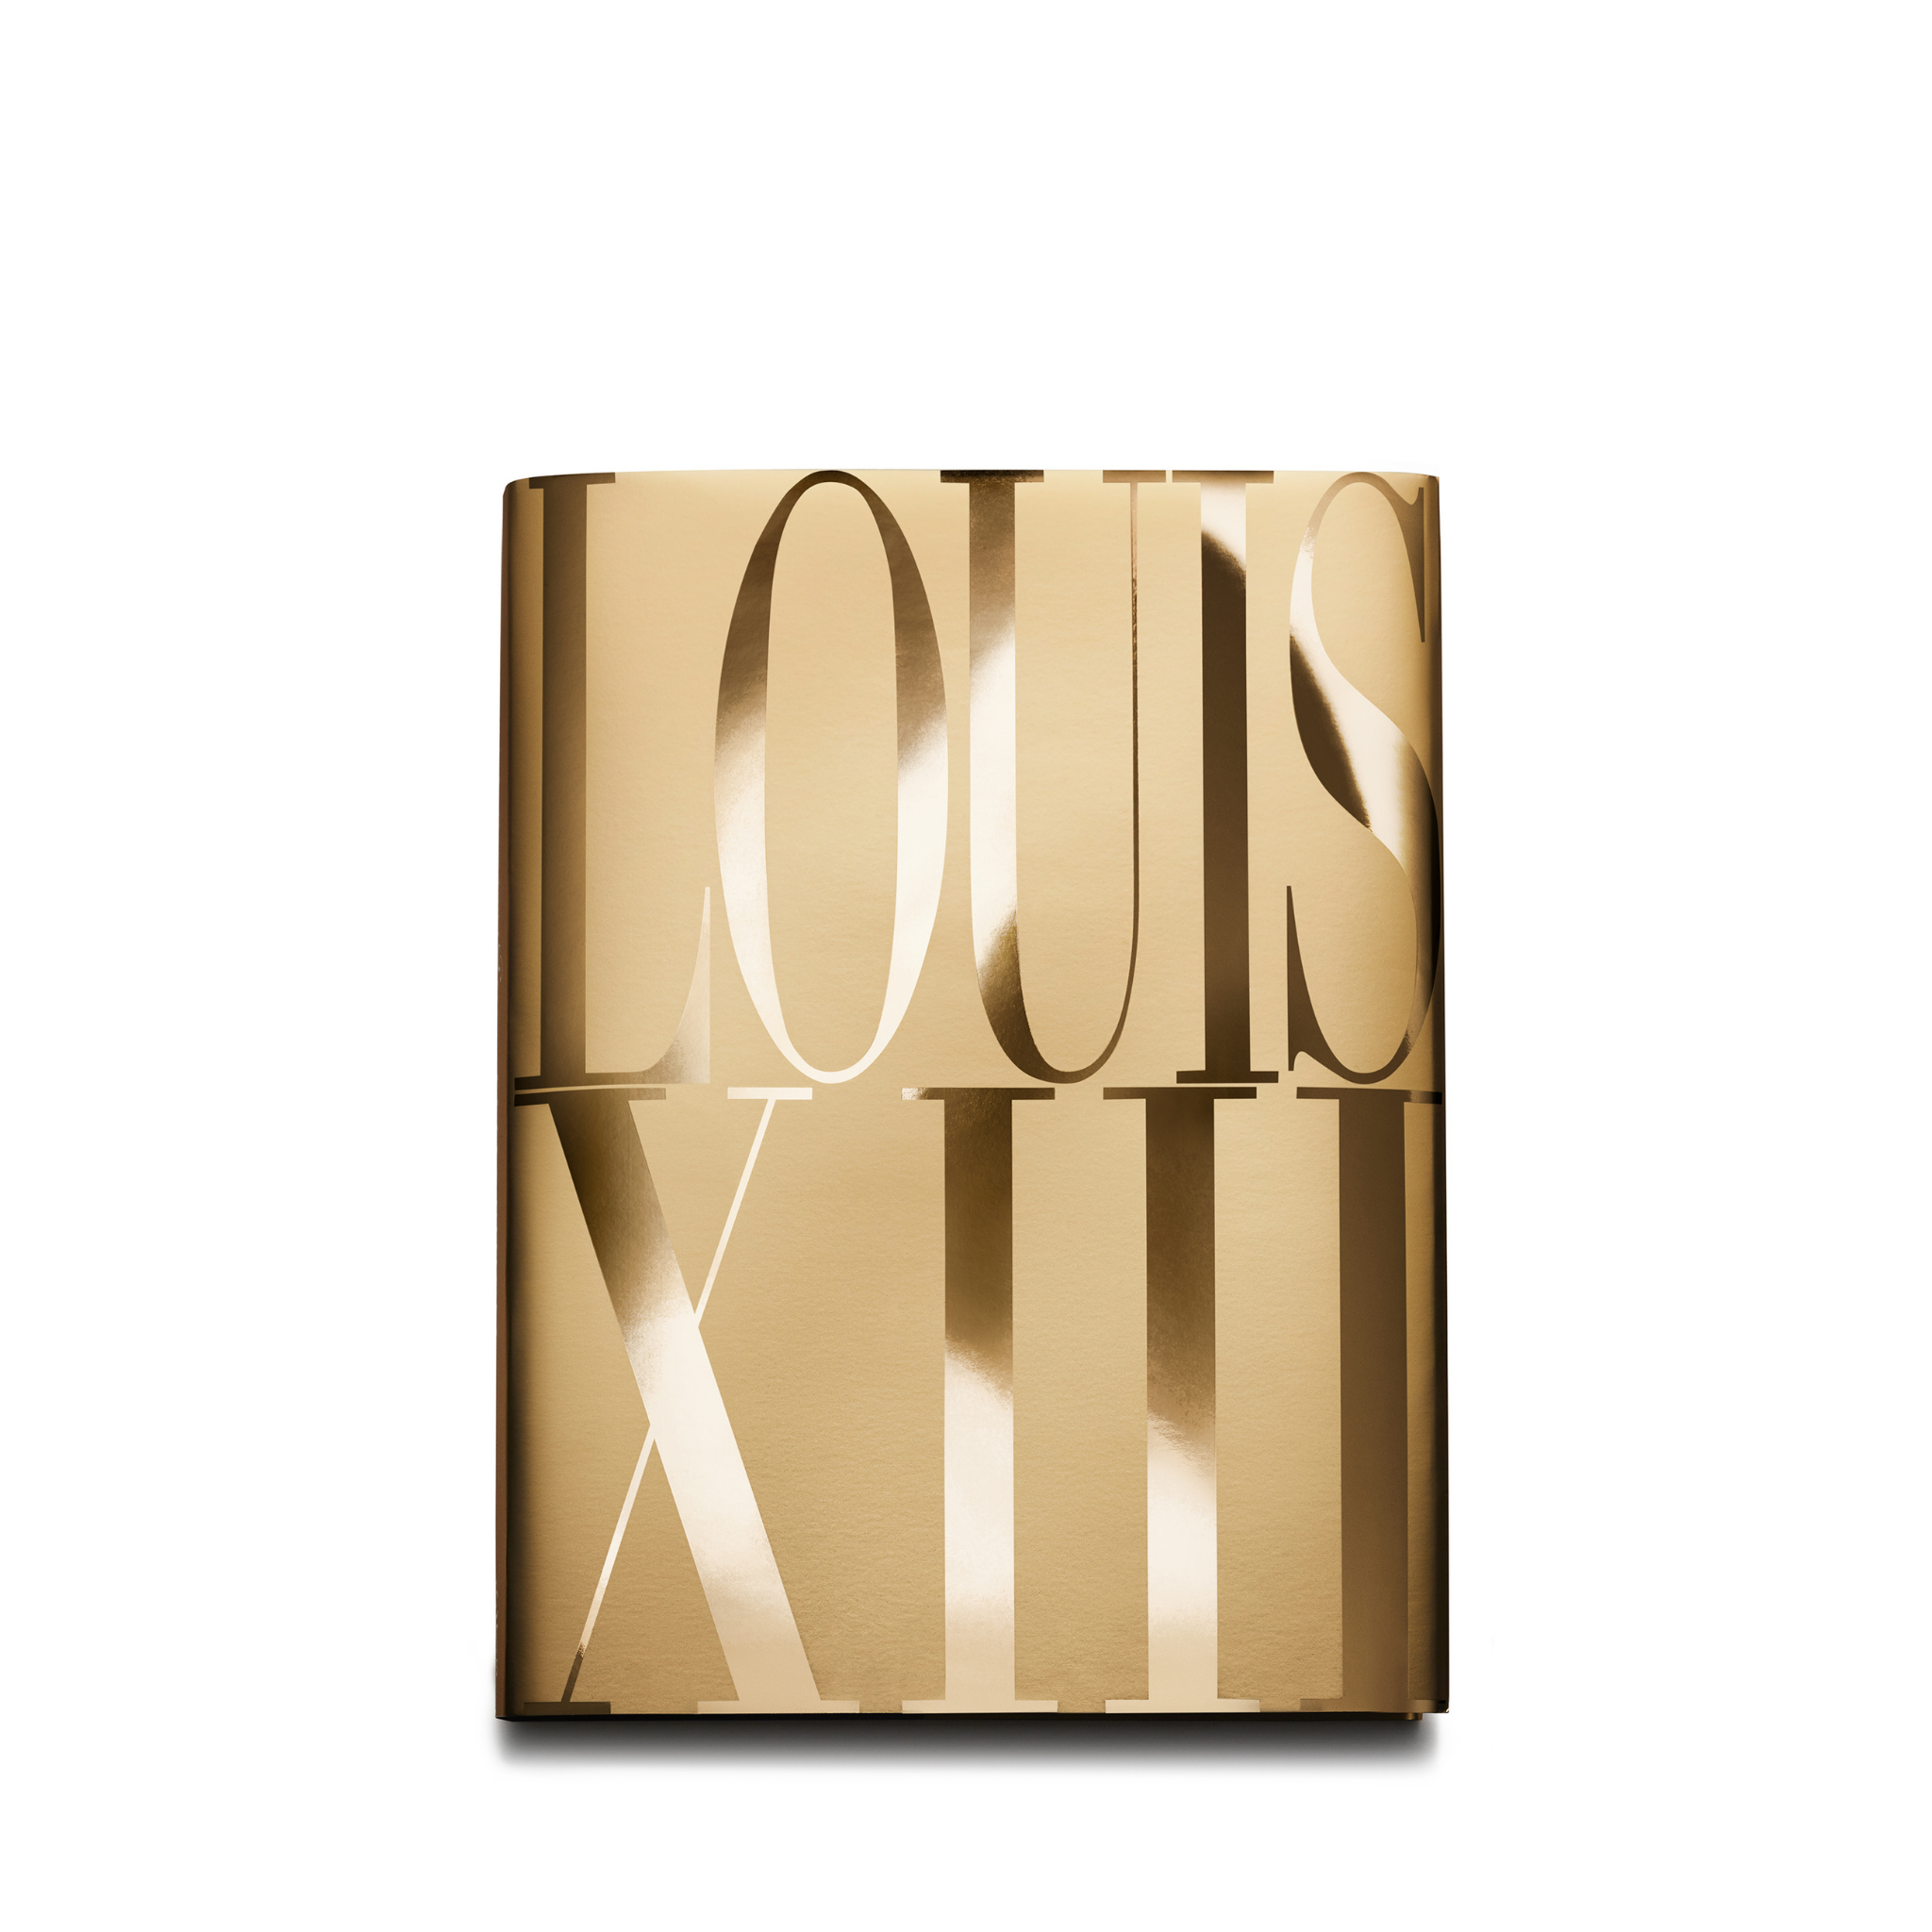 LOUIS XIII Cognac: The Thesaurus Art Book